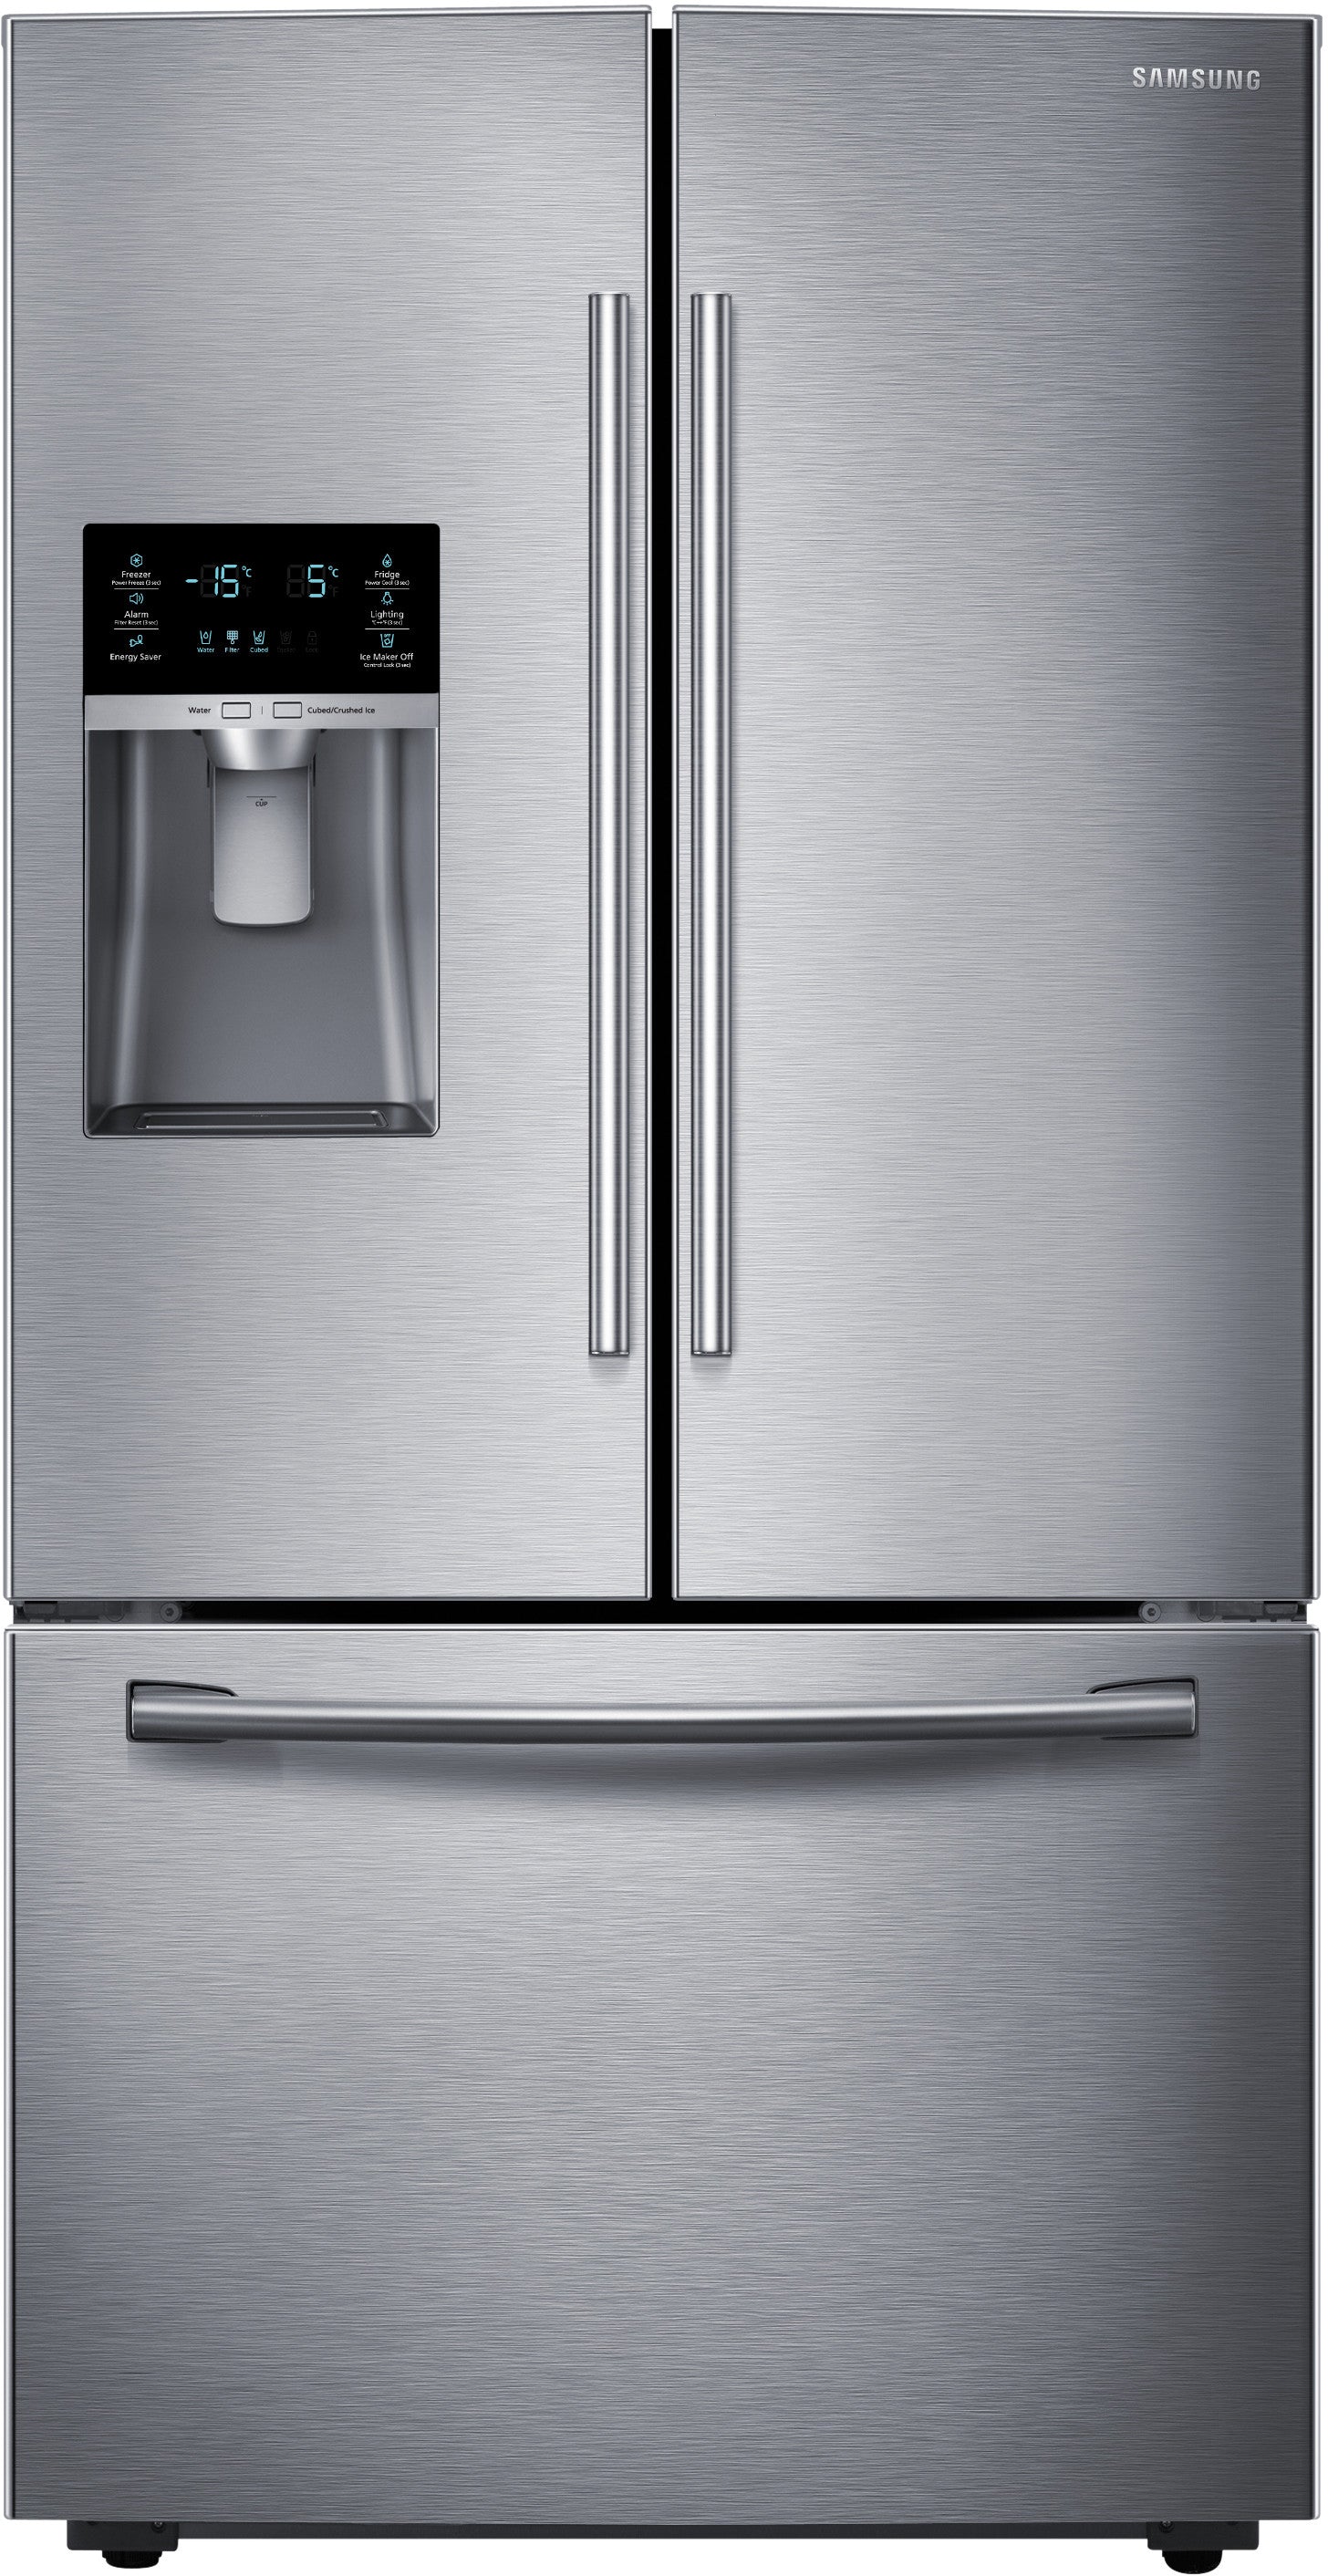 Samsung RF28HFEDBSR/AA 28 Cu. Ft. French Door Refrigerator